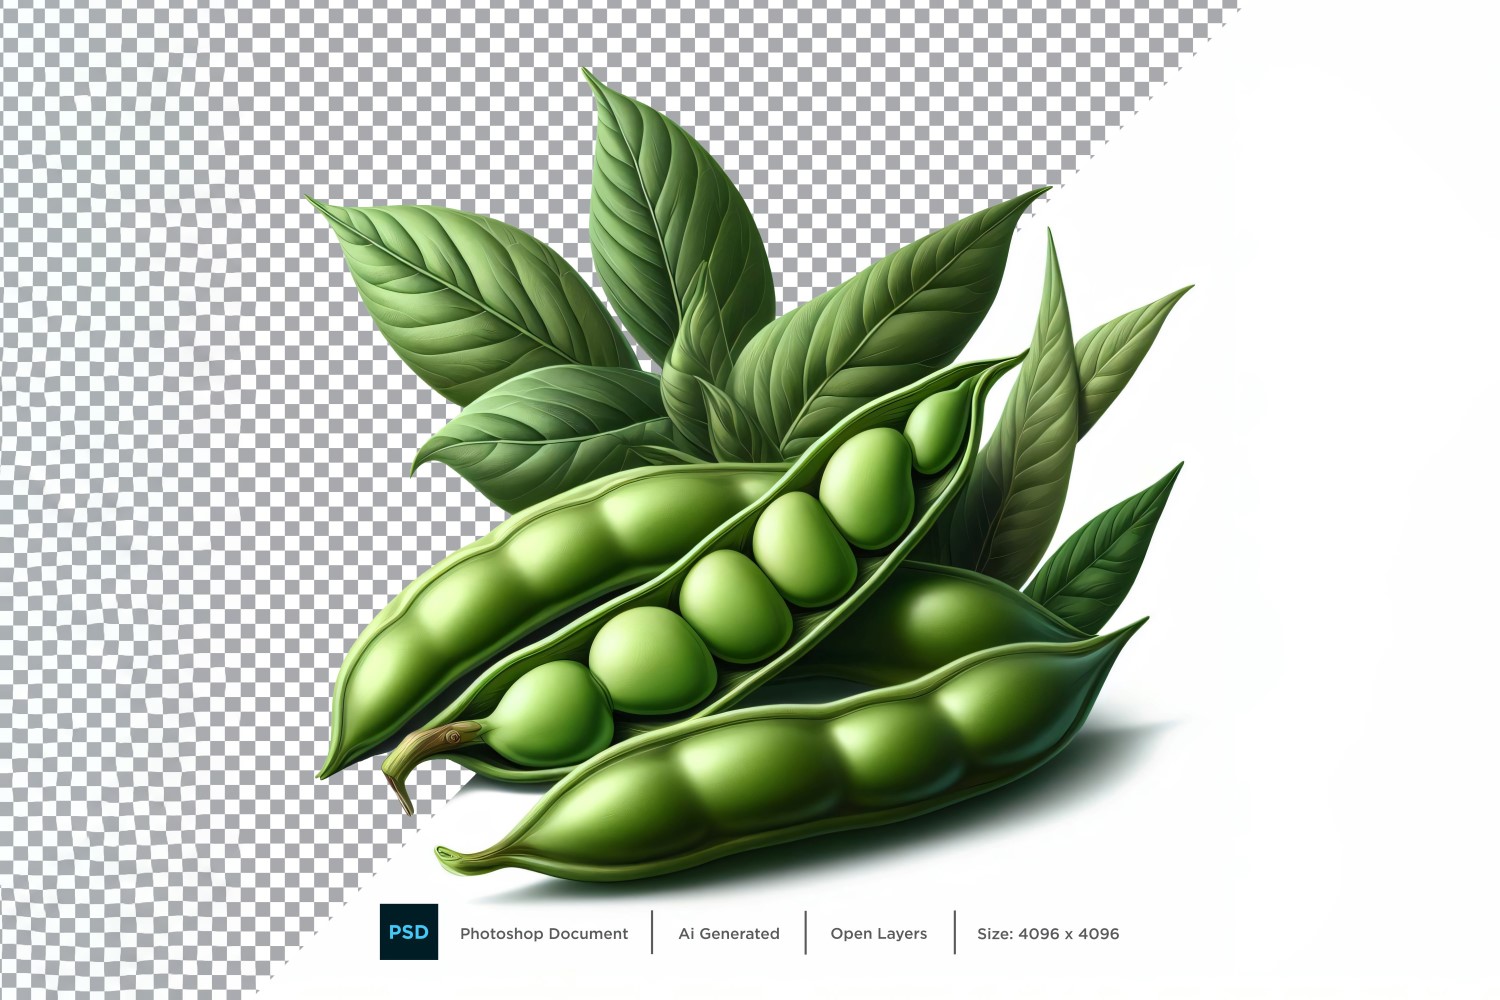 Green bean Fresh Vegetable Transparent background 03